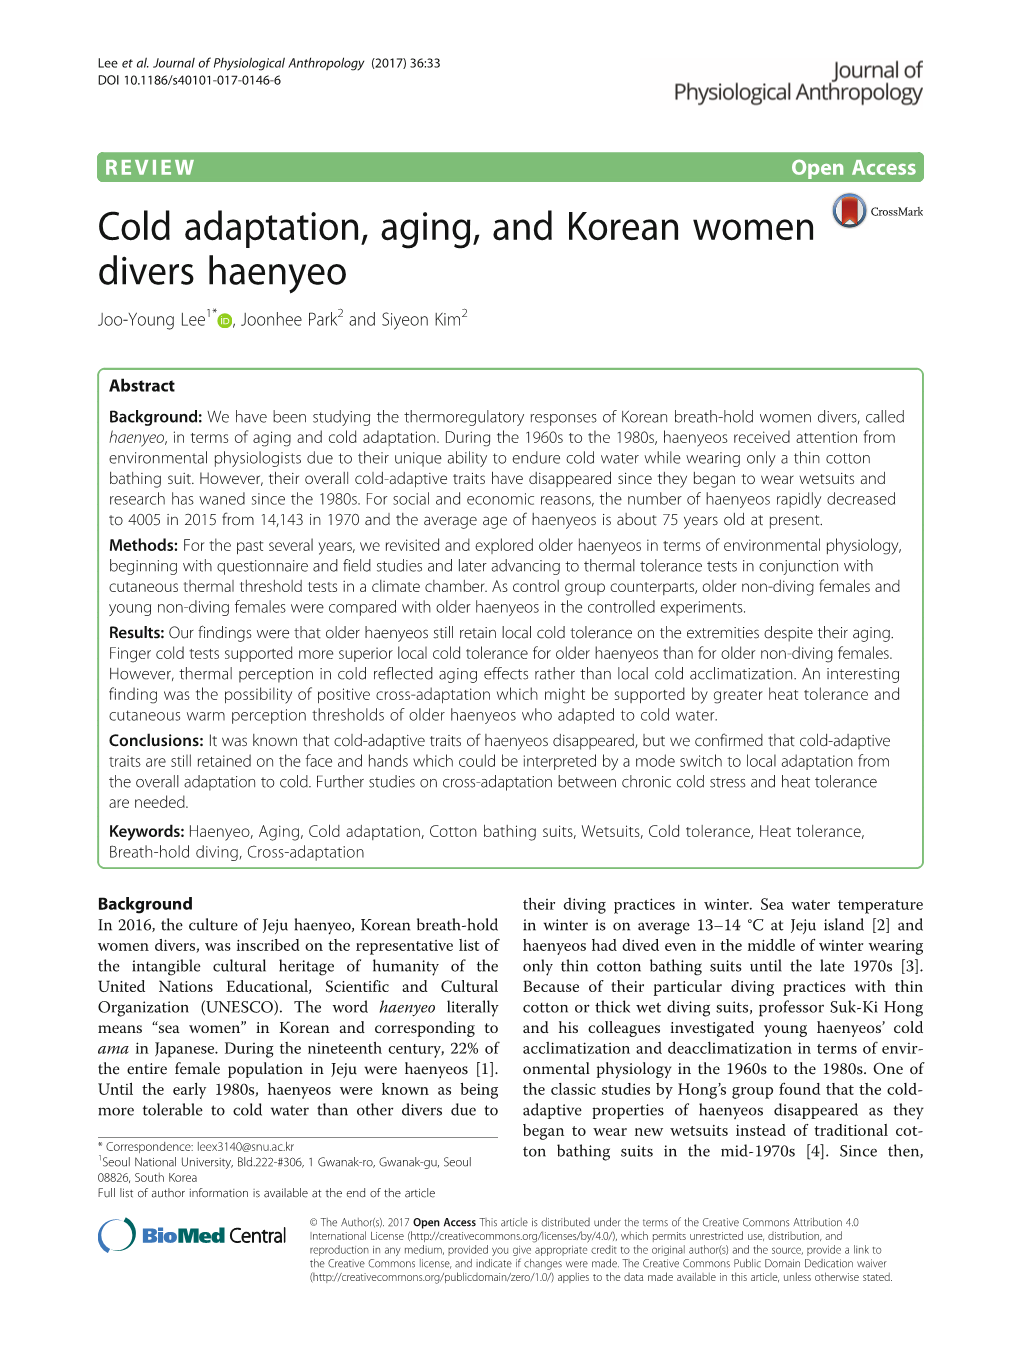 Cold Adaptation, Aging, and Korean Women Divers Haenyeo Joo-Young Lee1* , Joonhee Park2 and Siyeon Kim2